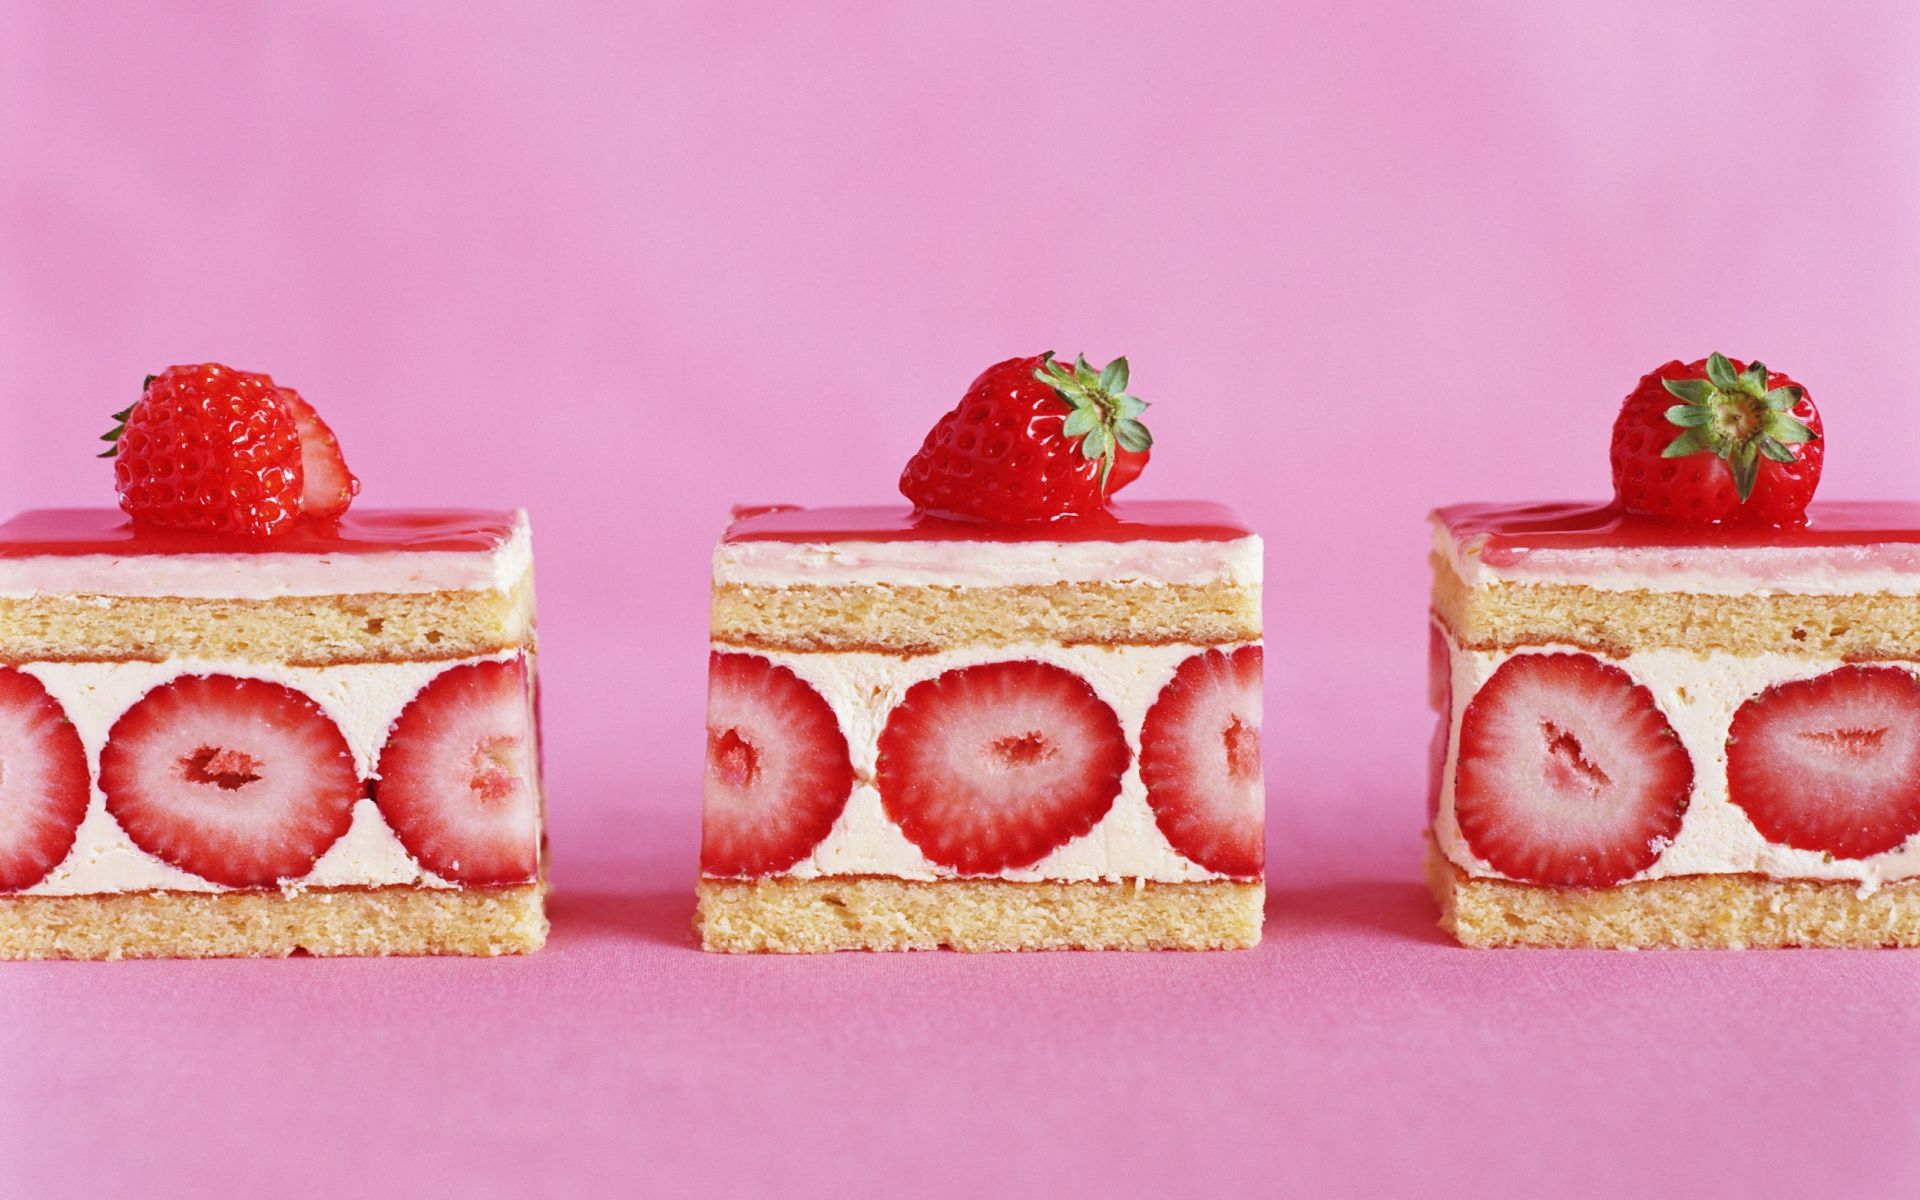 Food desert sweet cake fruit strawberries color cream sugar red